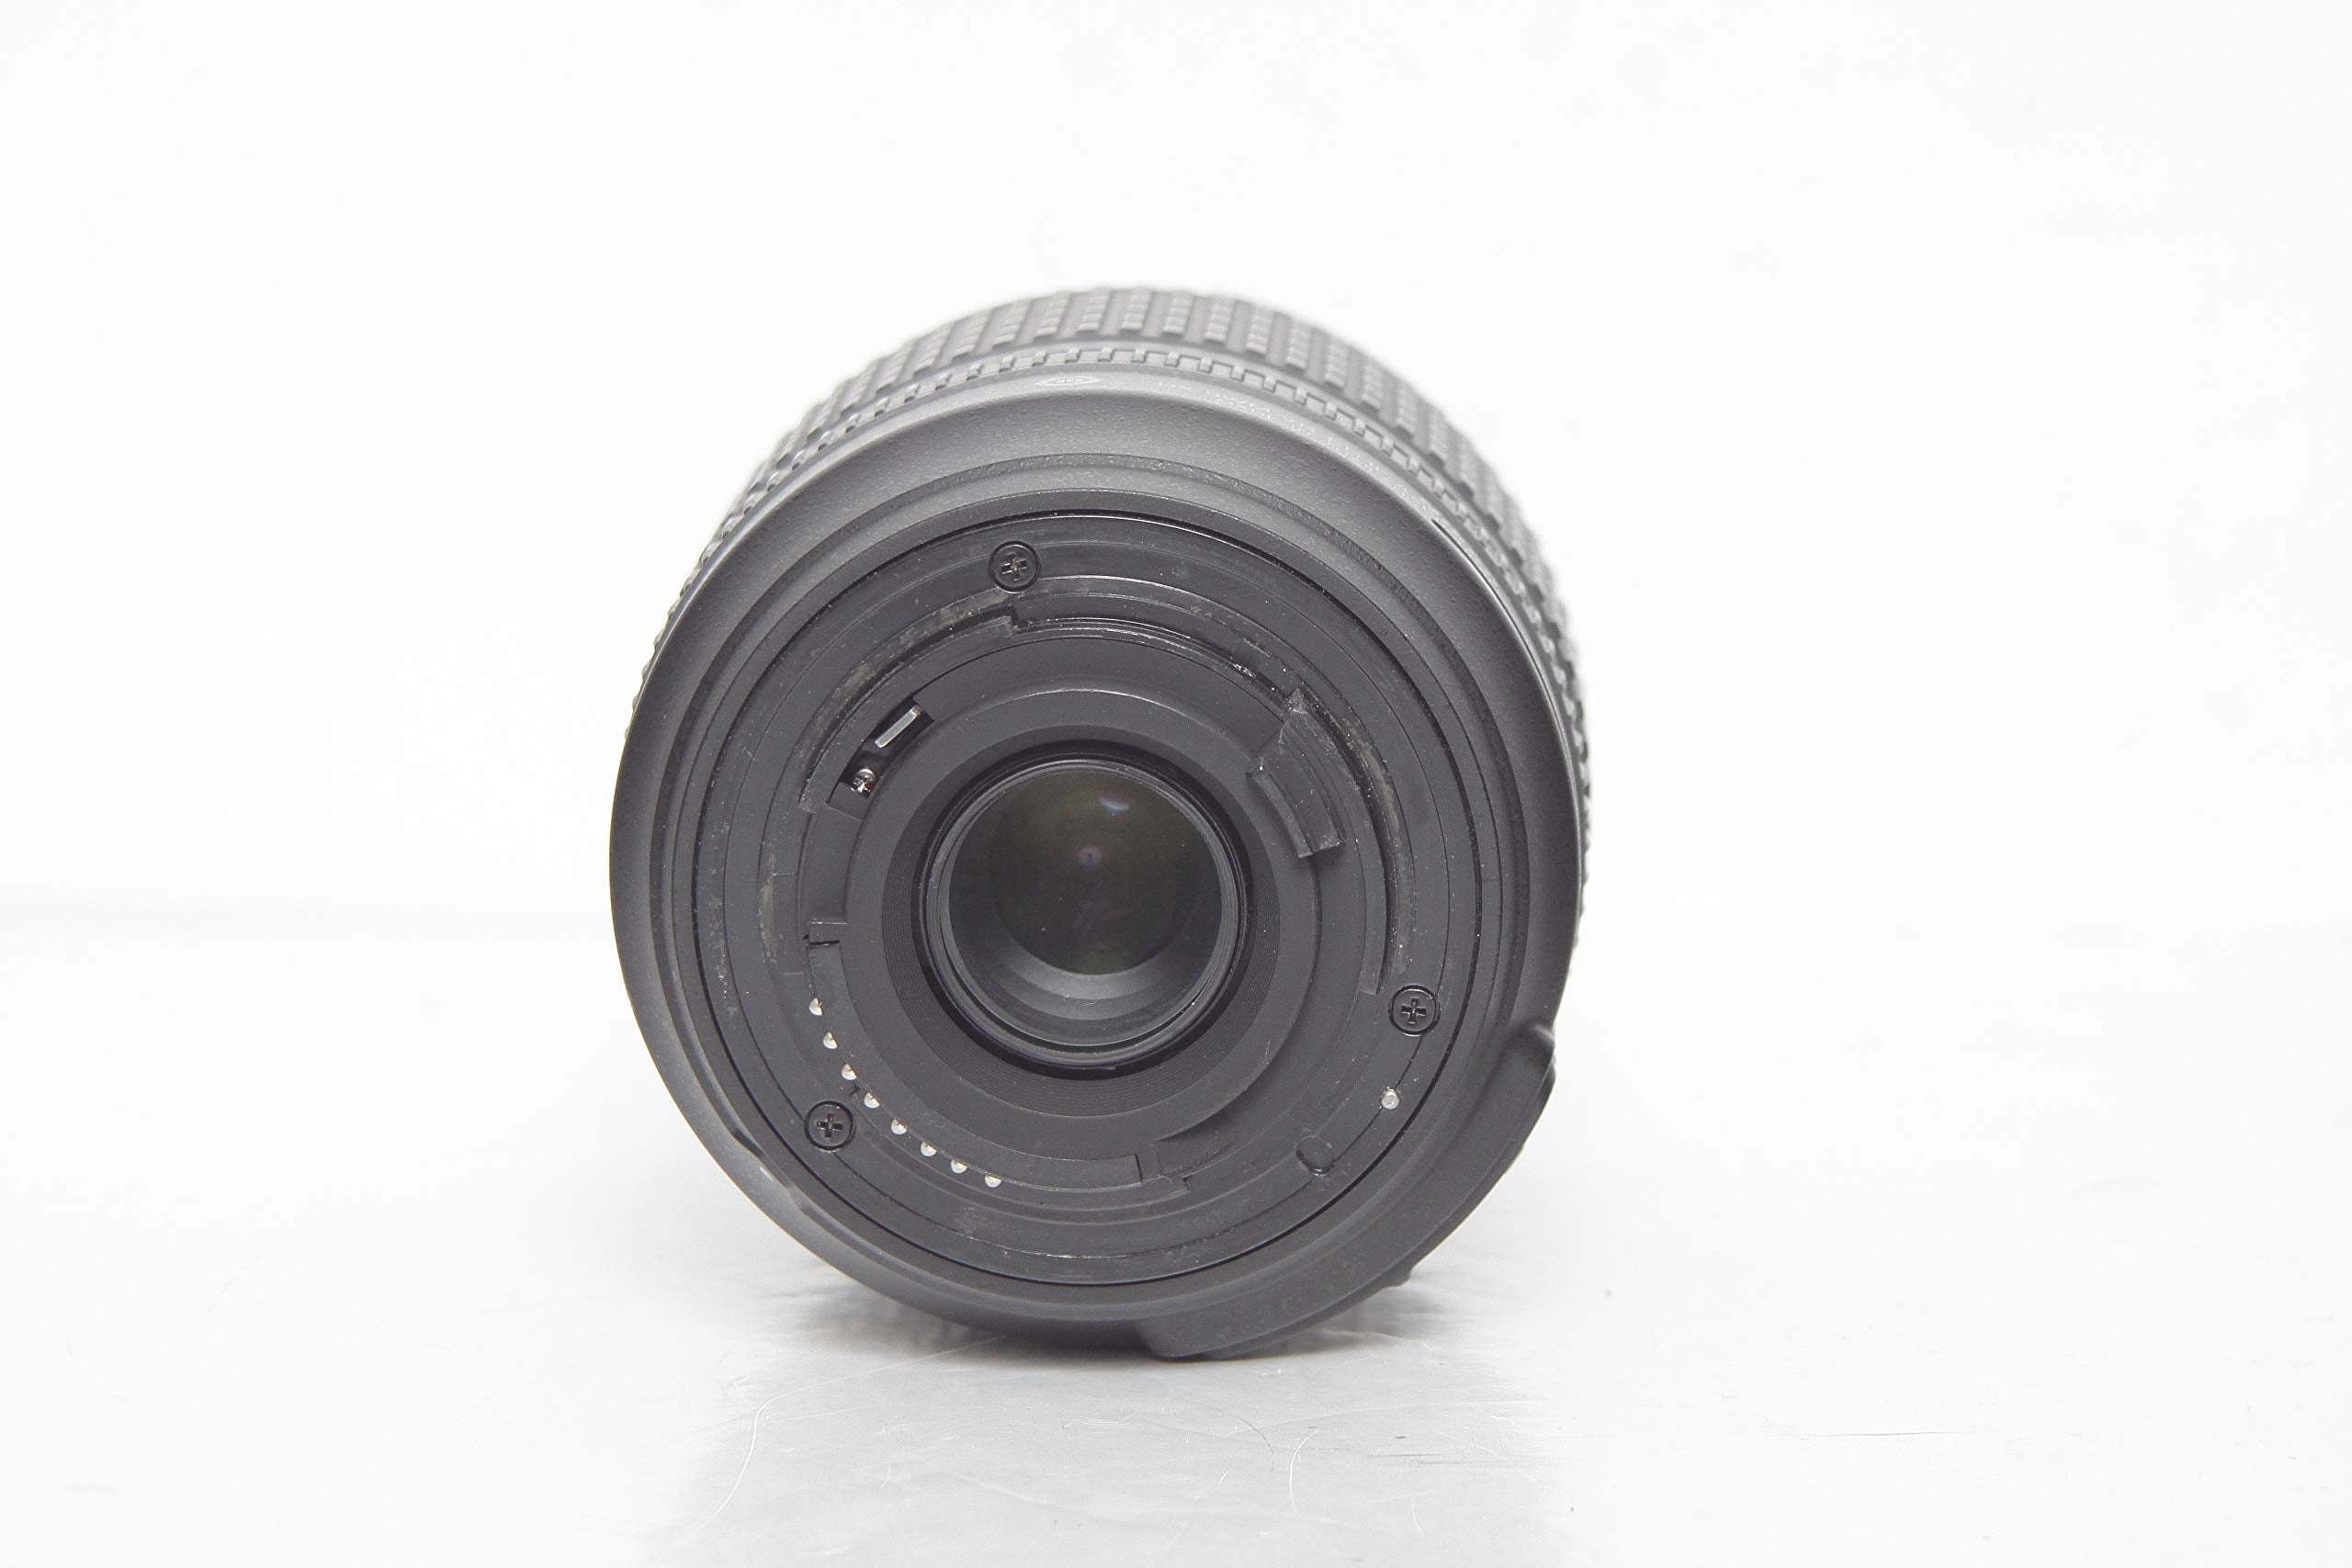 Nikon AF-S DX NIKKOR 18-105mm f/3.5-5.6G ED Vibration Reduction Zoom Lens with Auto Focus for Nikon DSLR Cameras - White - Used